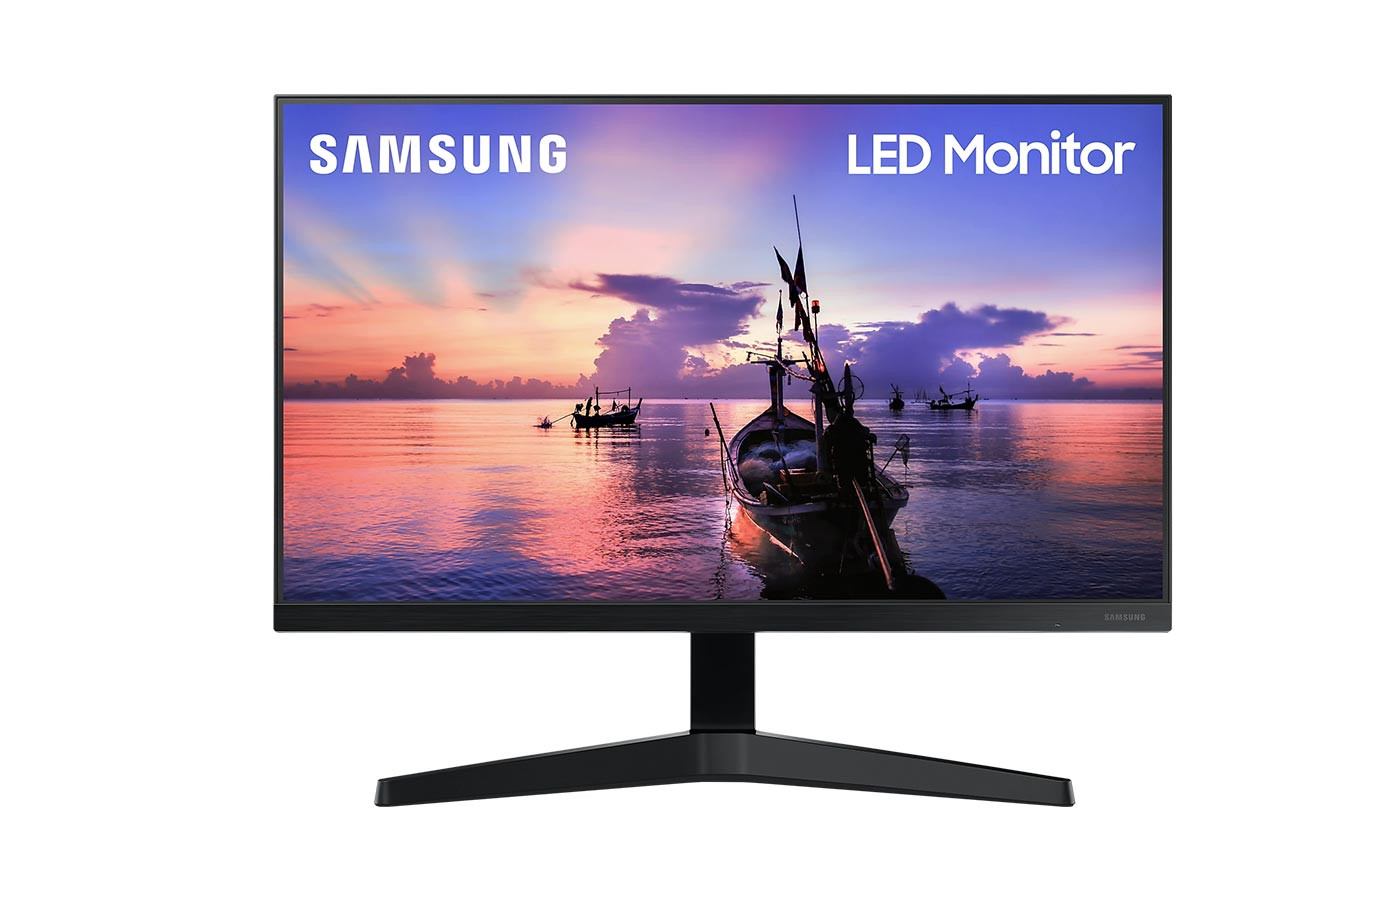 Monitor Samsung 27 Pulgadas Qhd S60ua - Shopink